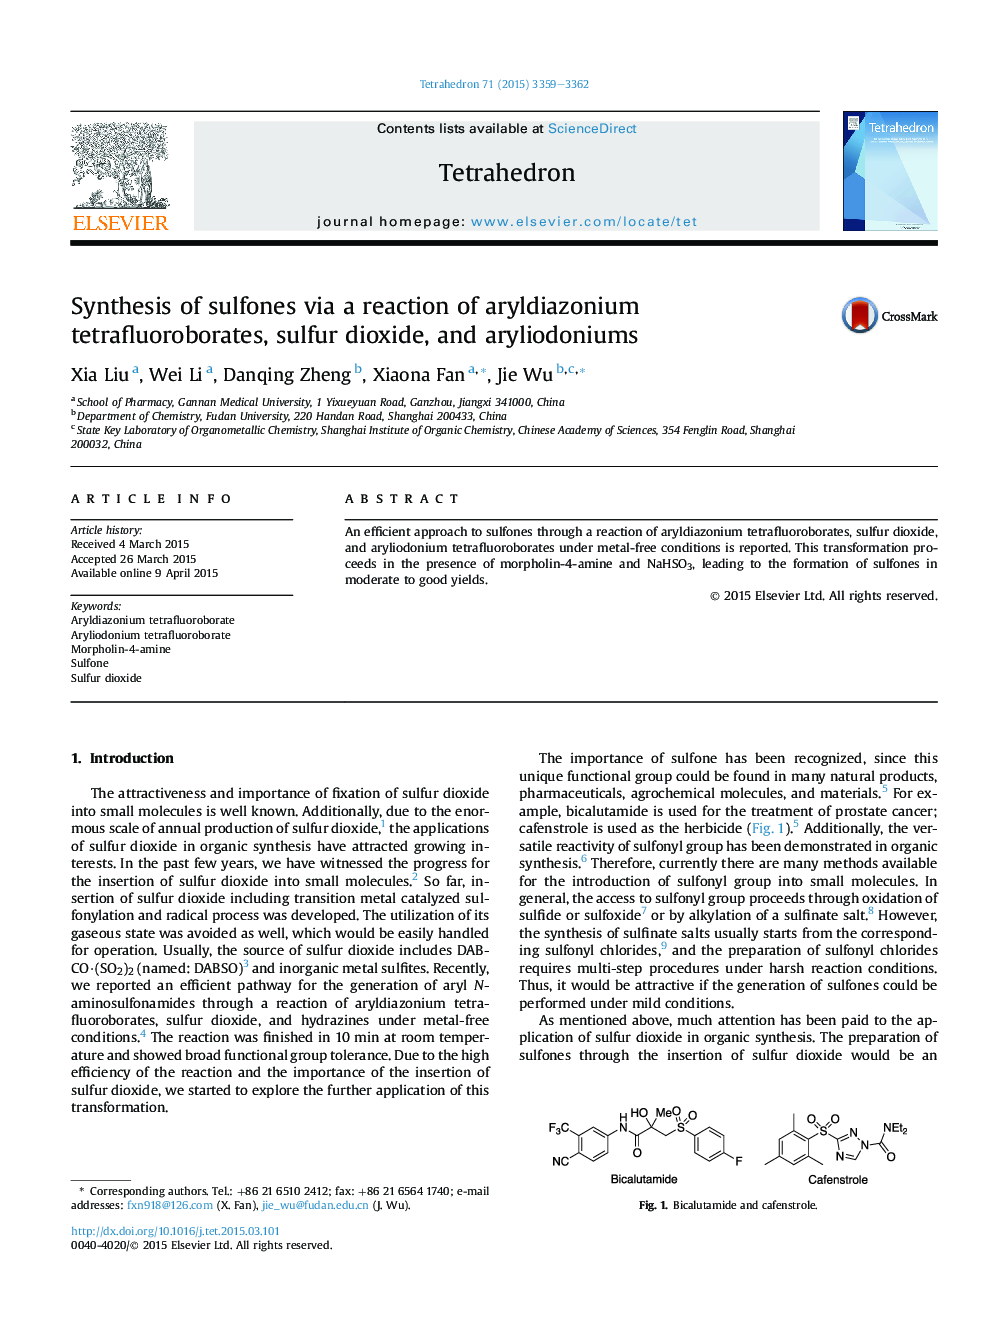 Synthesis of sulfones via a reaction of aryldiazonium tetrafluoroborates, sulfur dioxide, and aryliodoniums